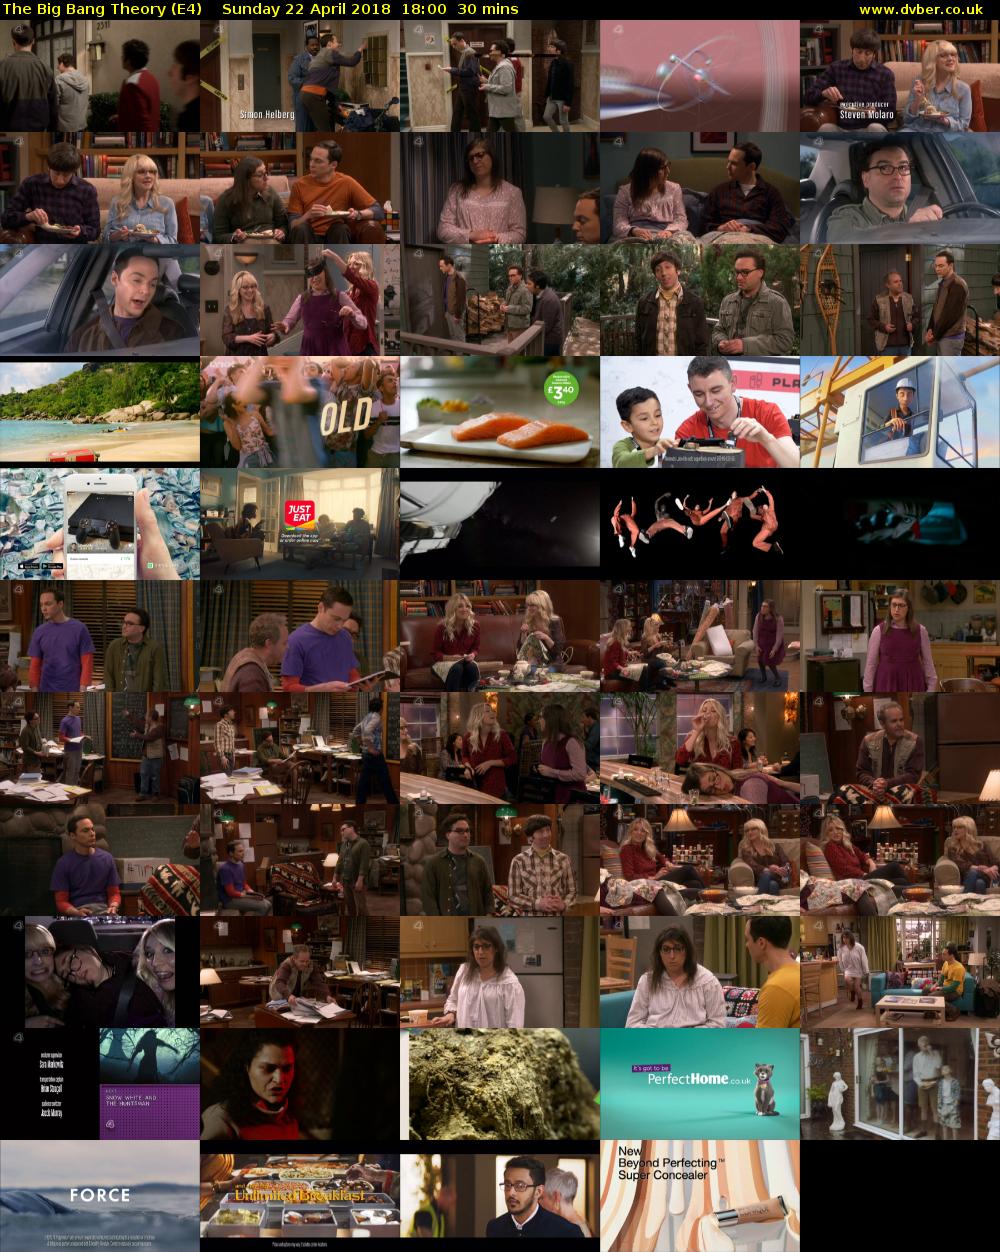 The Big Bang Theory (E4) Sunday 22 April 2018 18:00 - 18:30